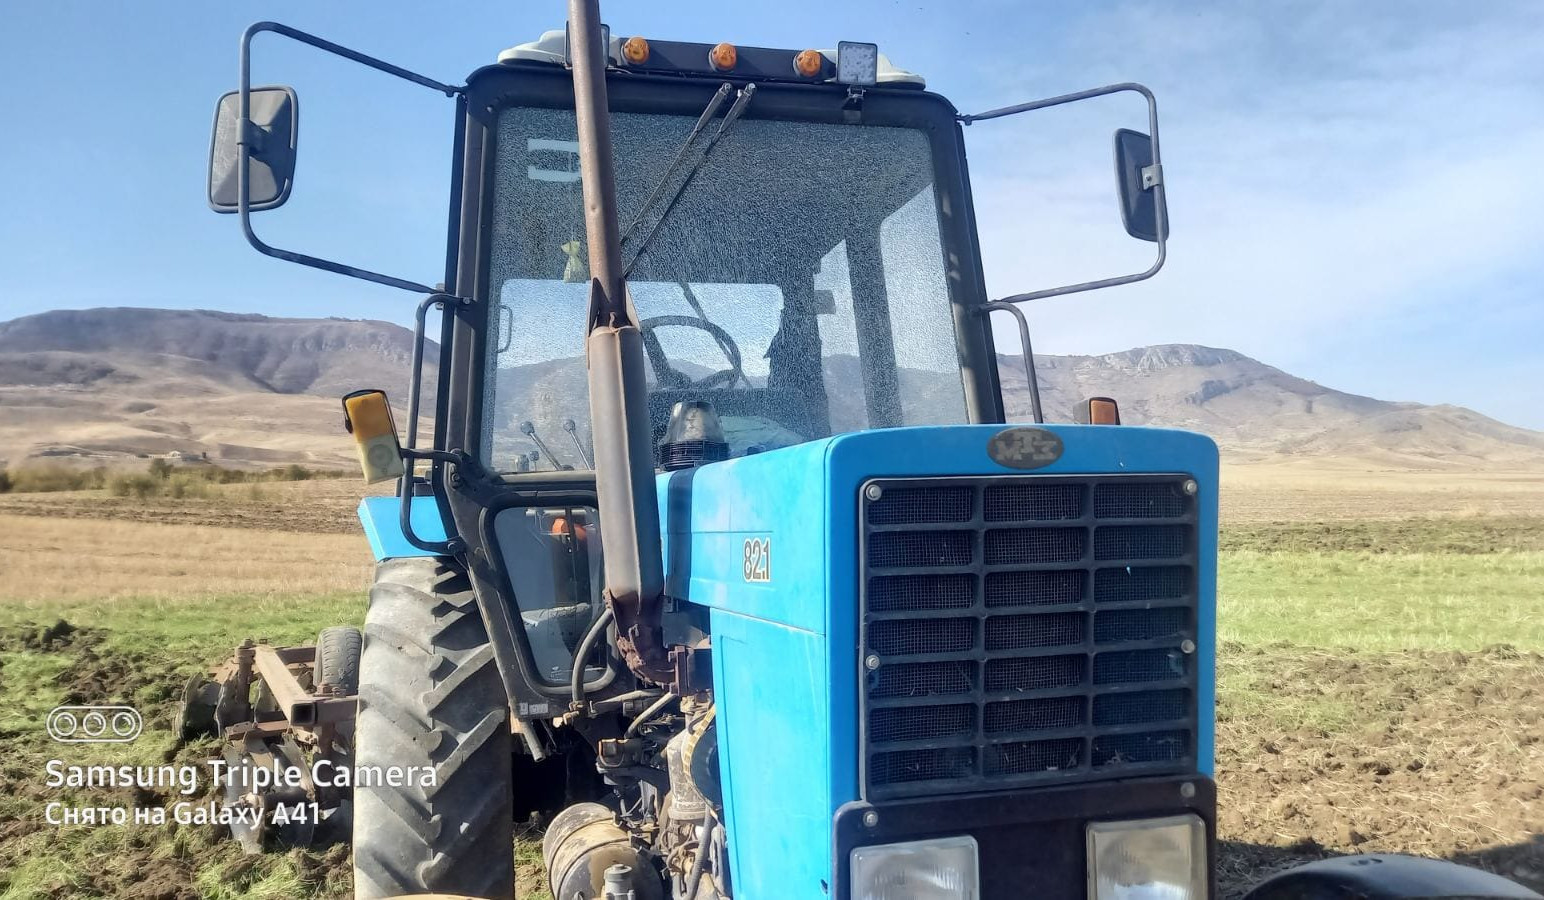 Azerbaijanis shot at tractor driver: Artsakh Ministry of Internal Affairs